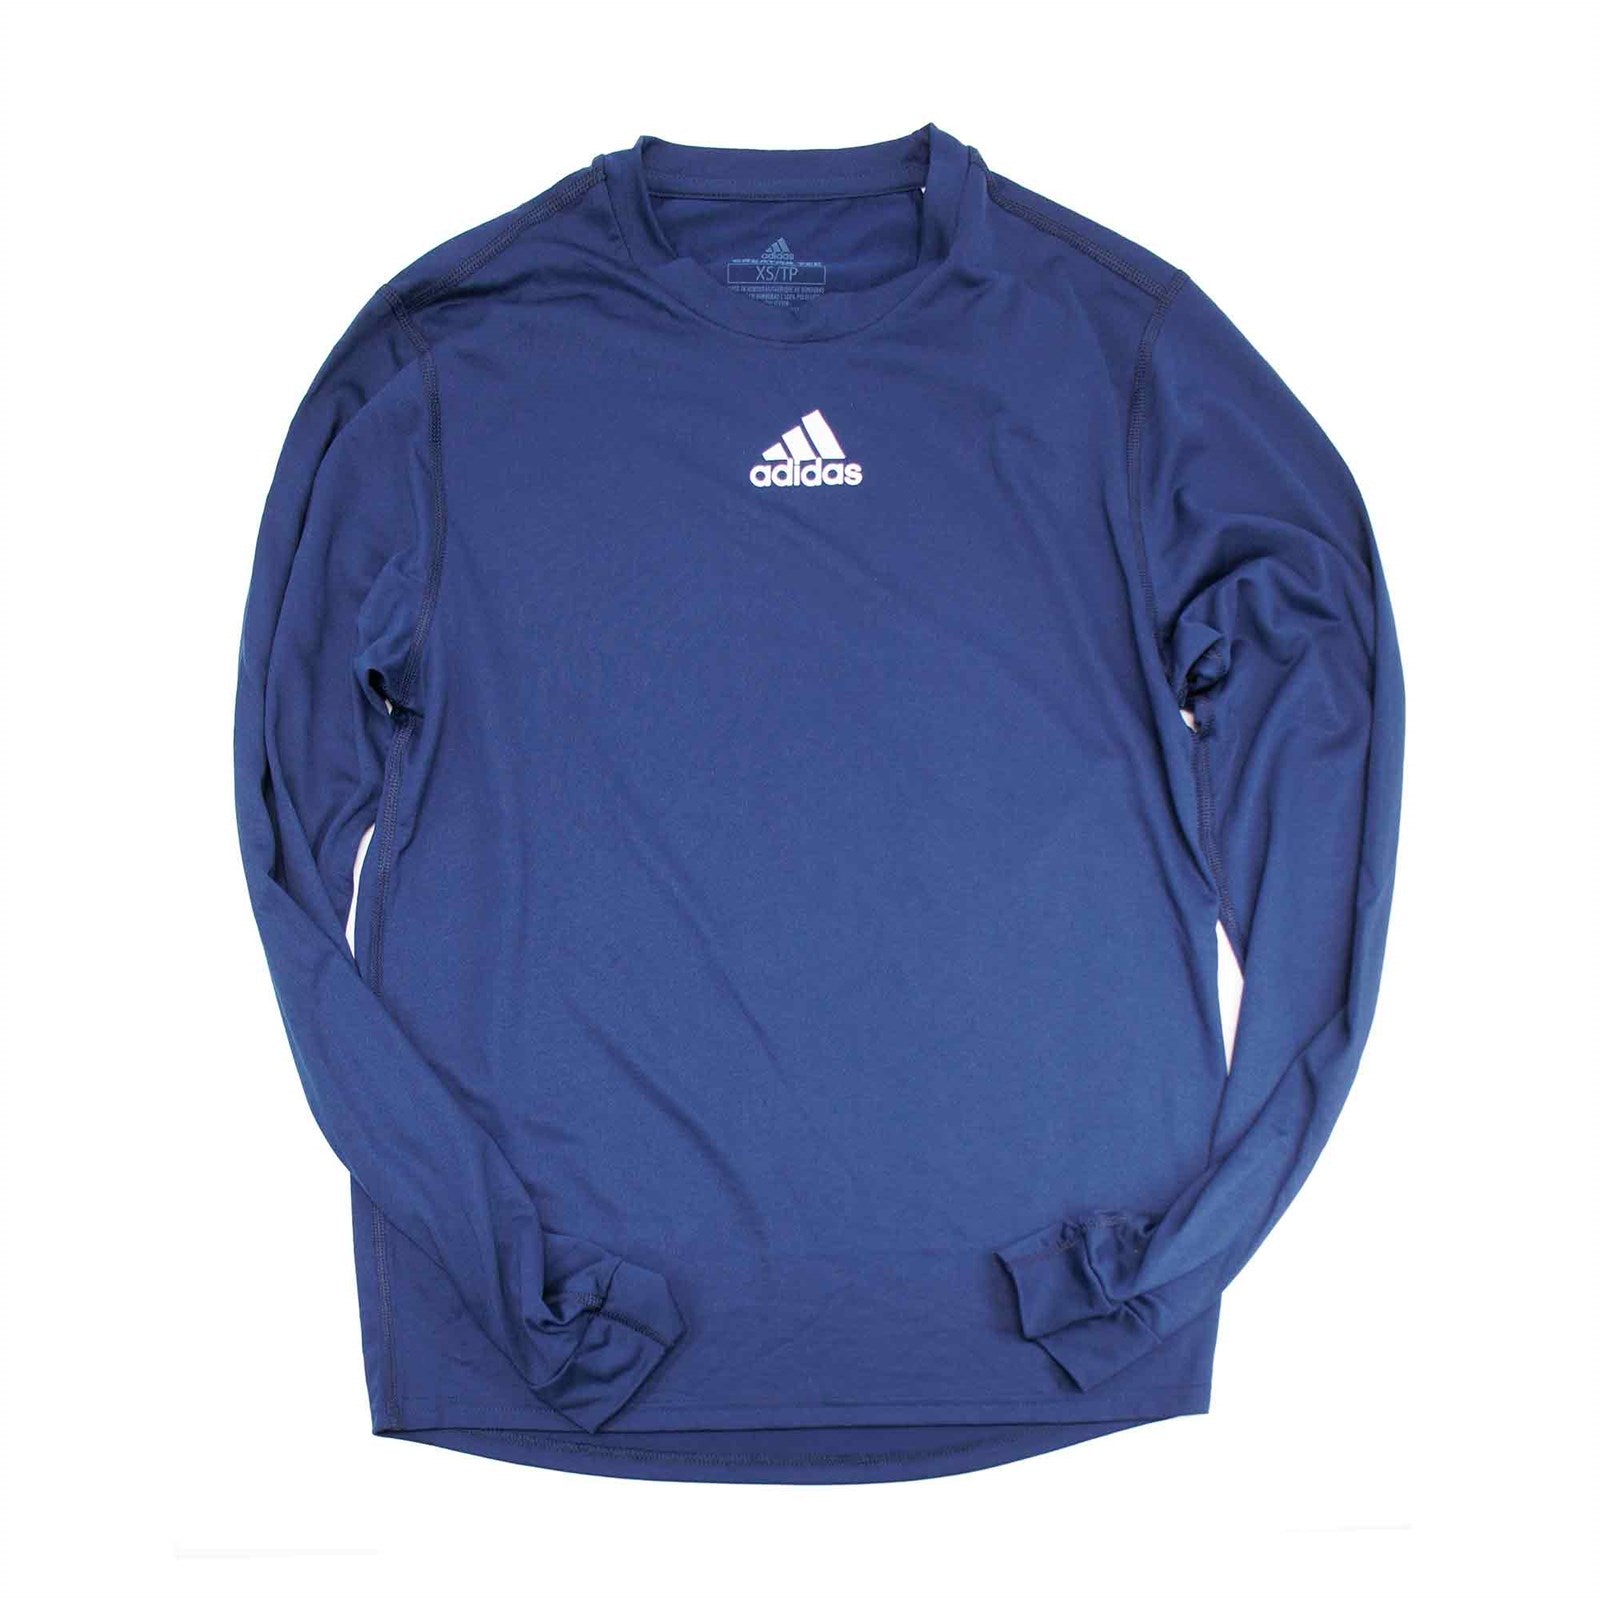 Adidas Men Creator Long Sleeve Climalite Tshirt